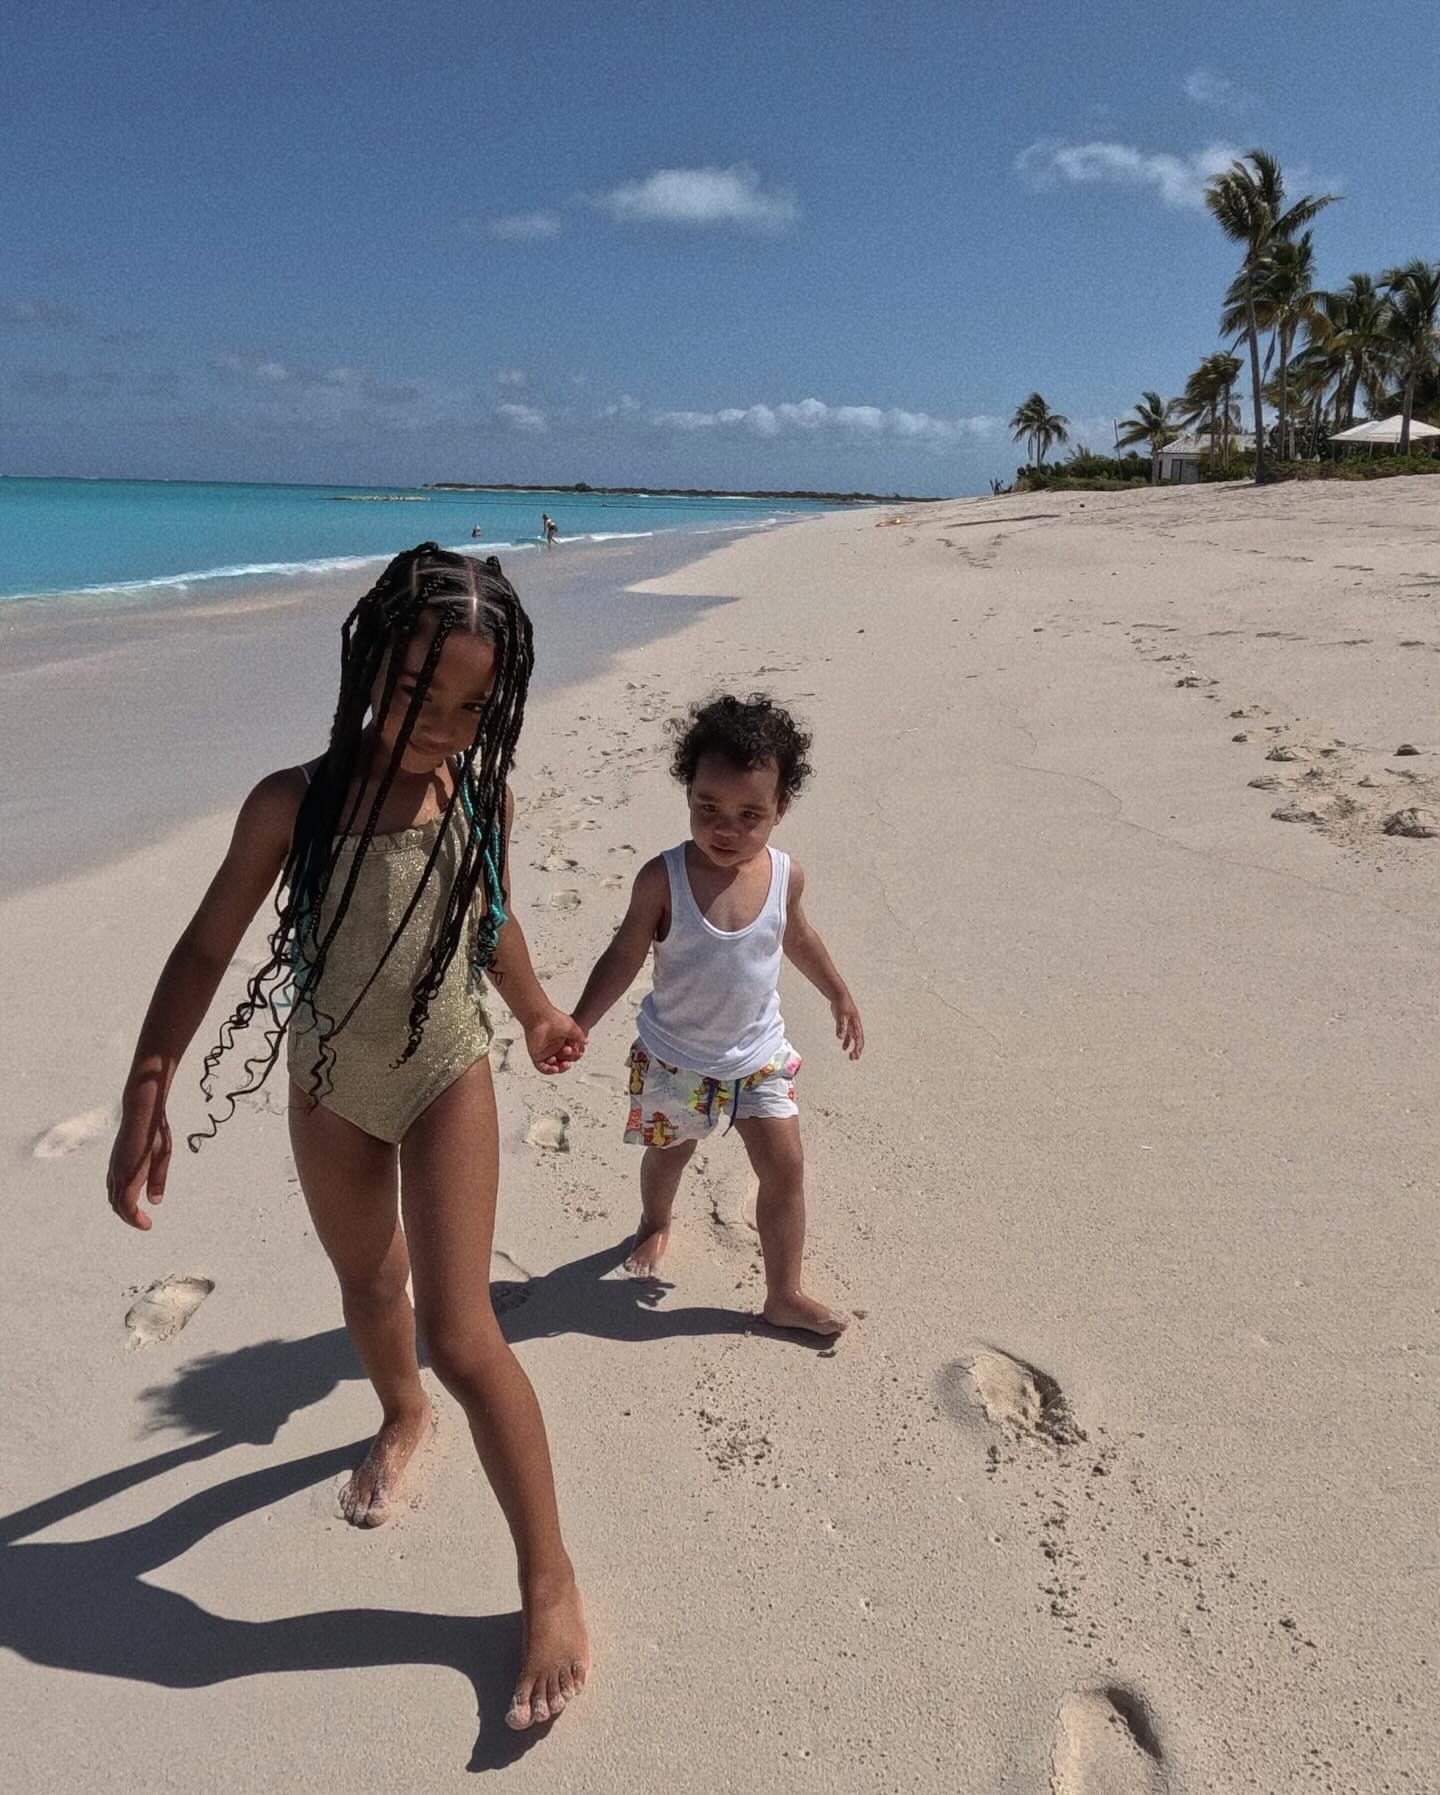 The star's family enjoyed an island getaway for Spring Break